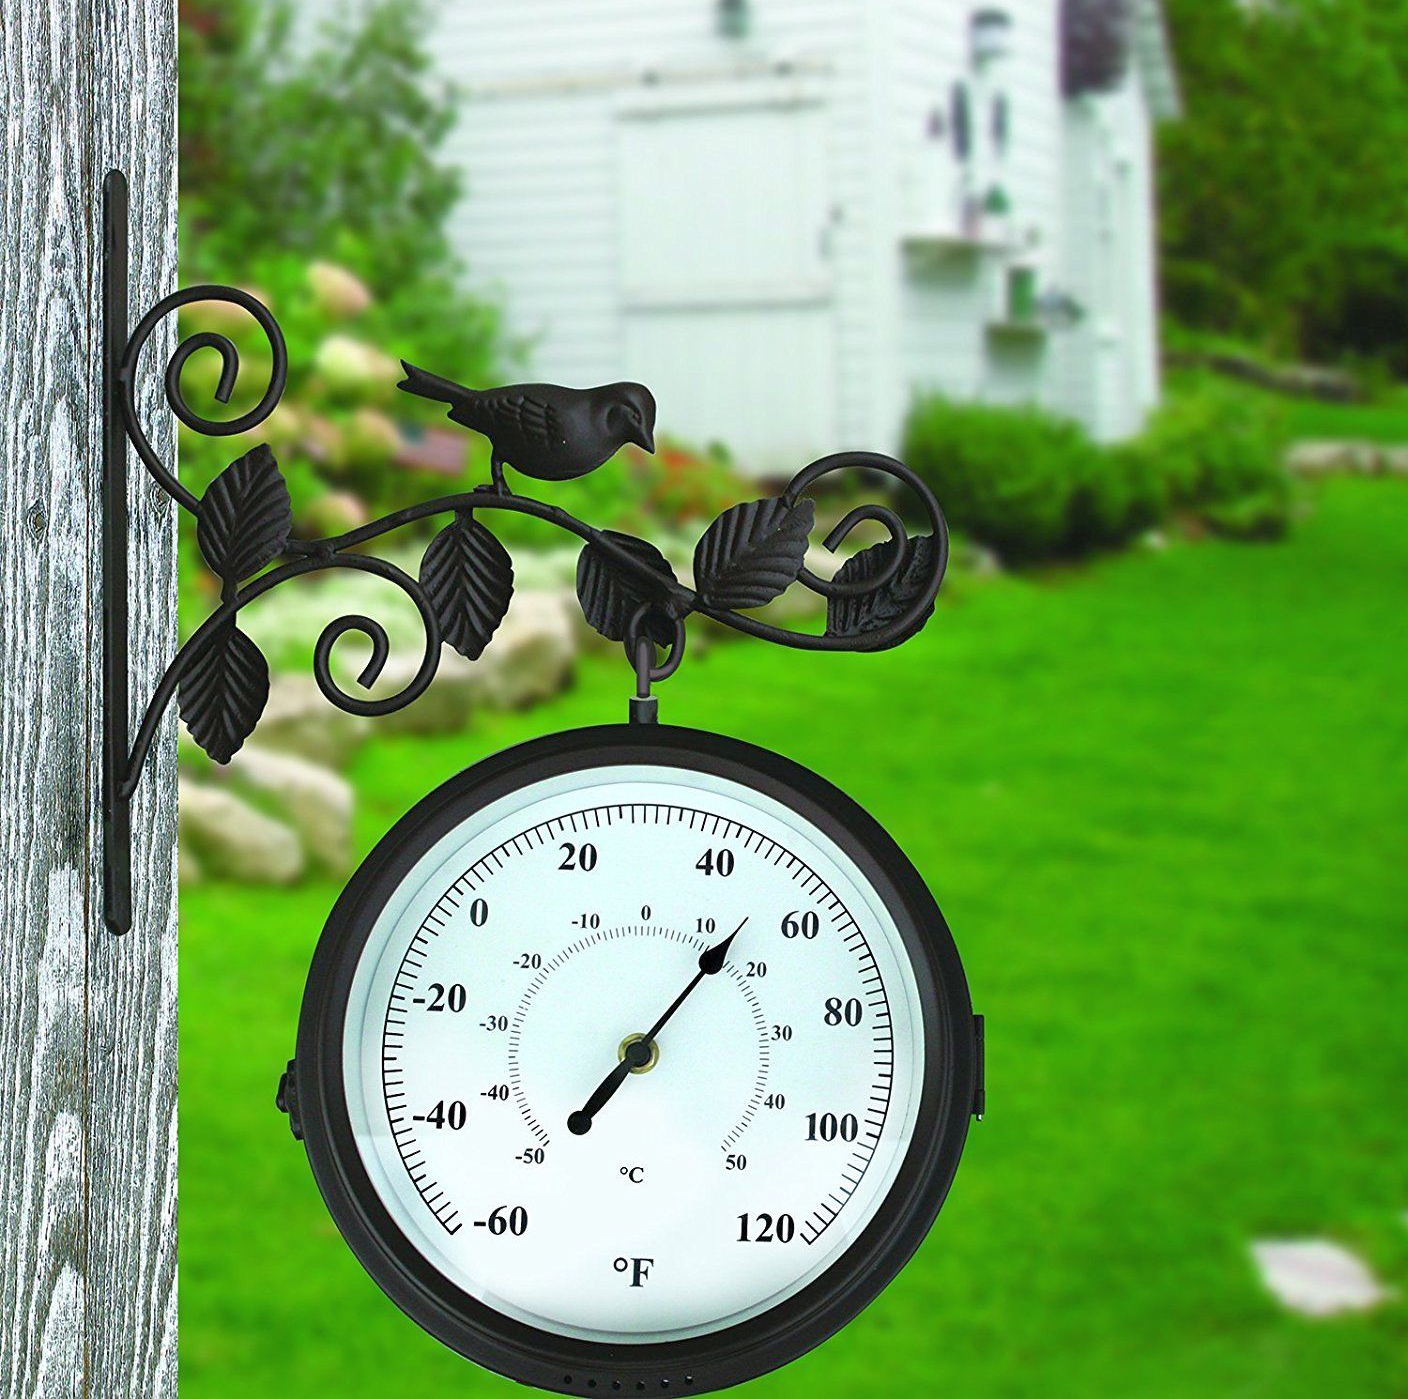 Decorative Outdoor Singing Bird Clock Thermometer, Singing Bird